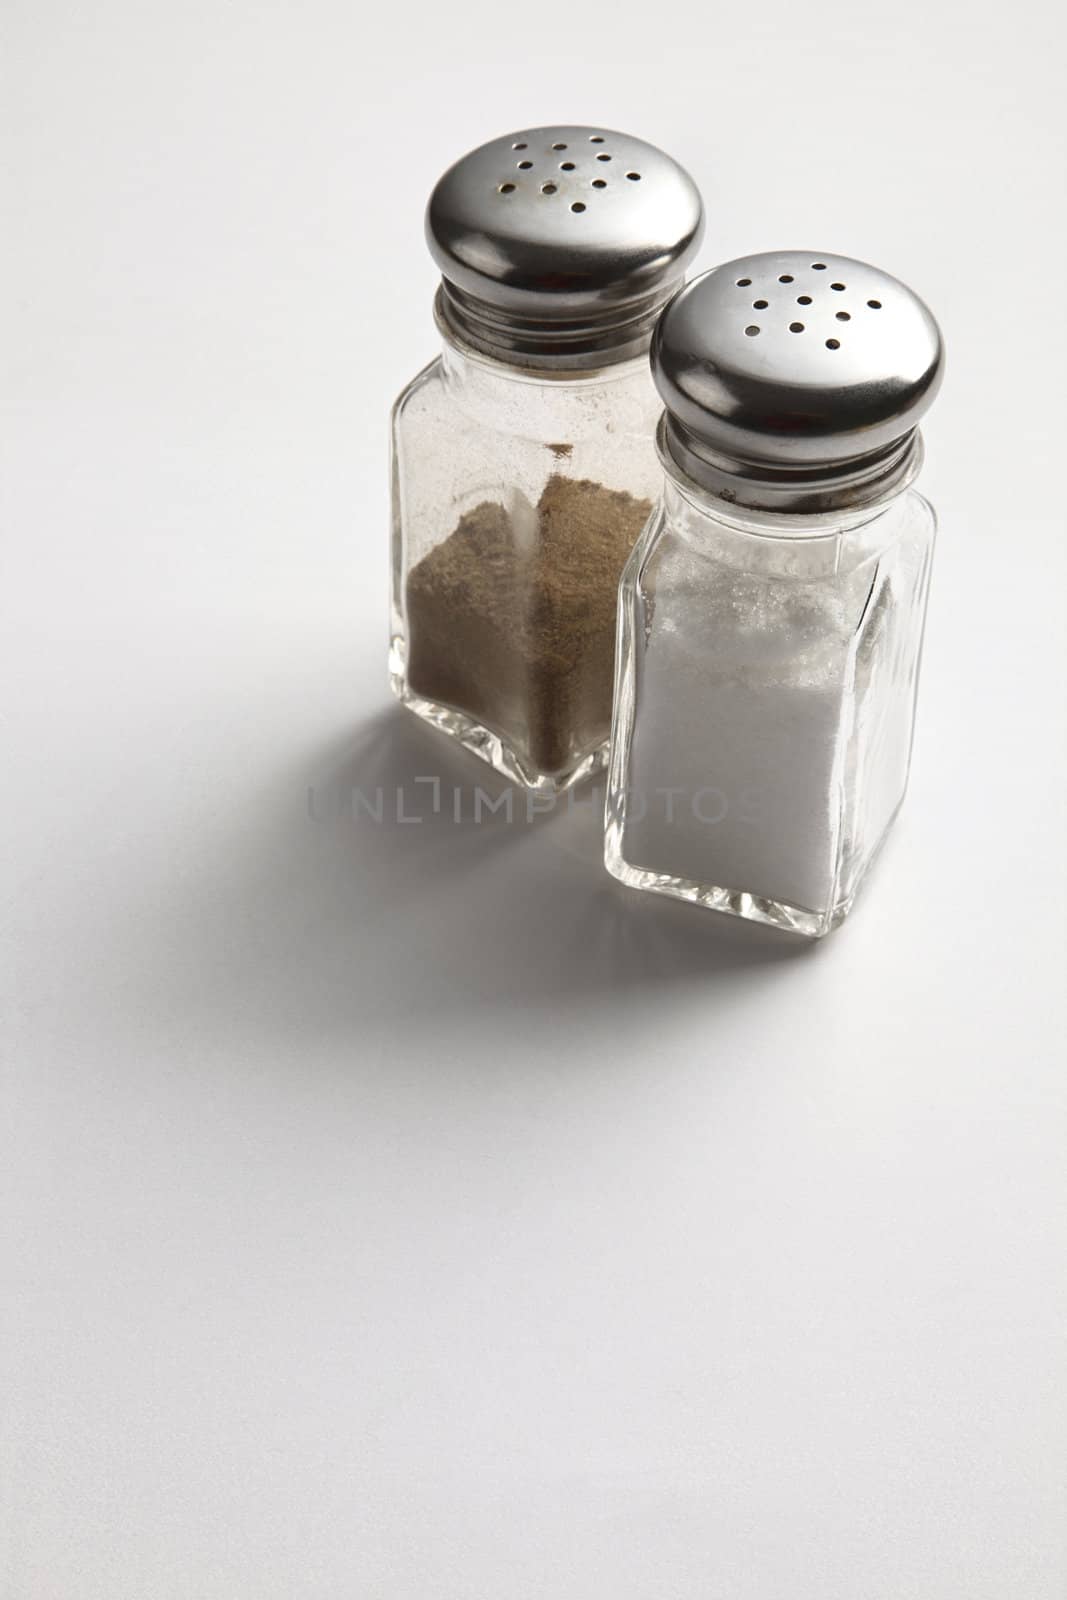 pepper and salt shaker by eskaylim